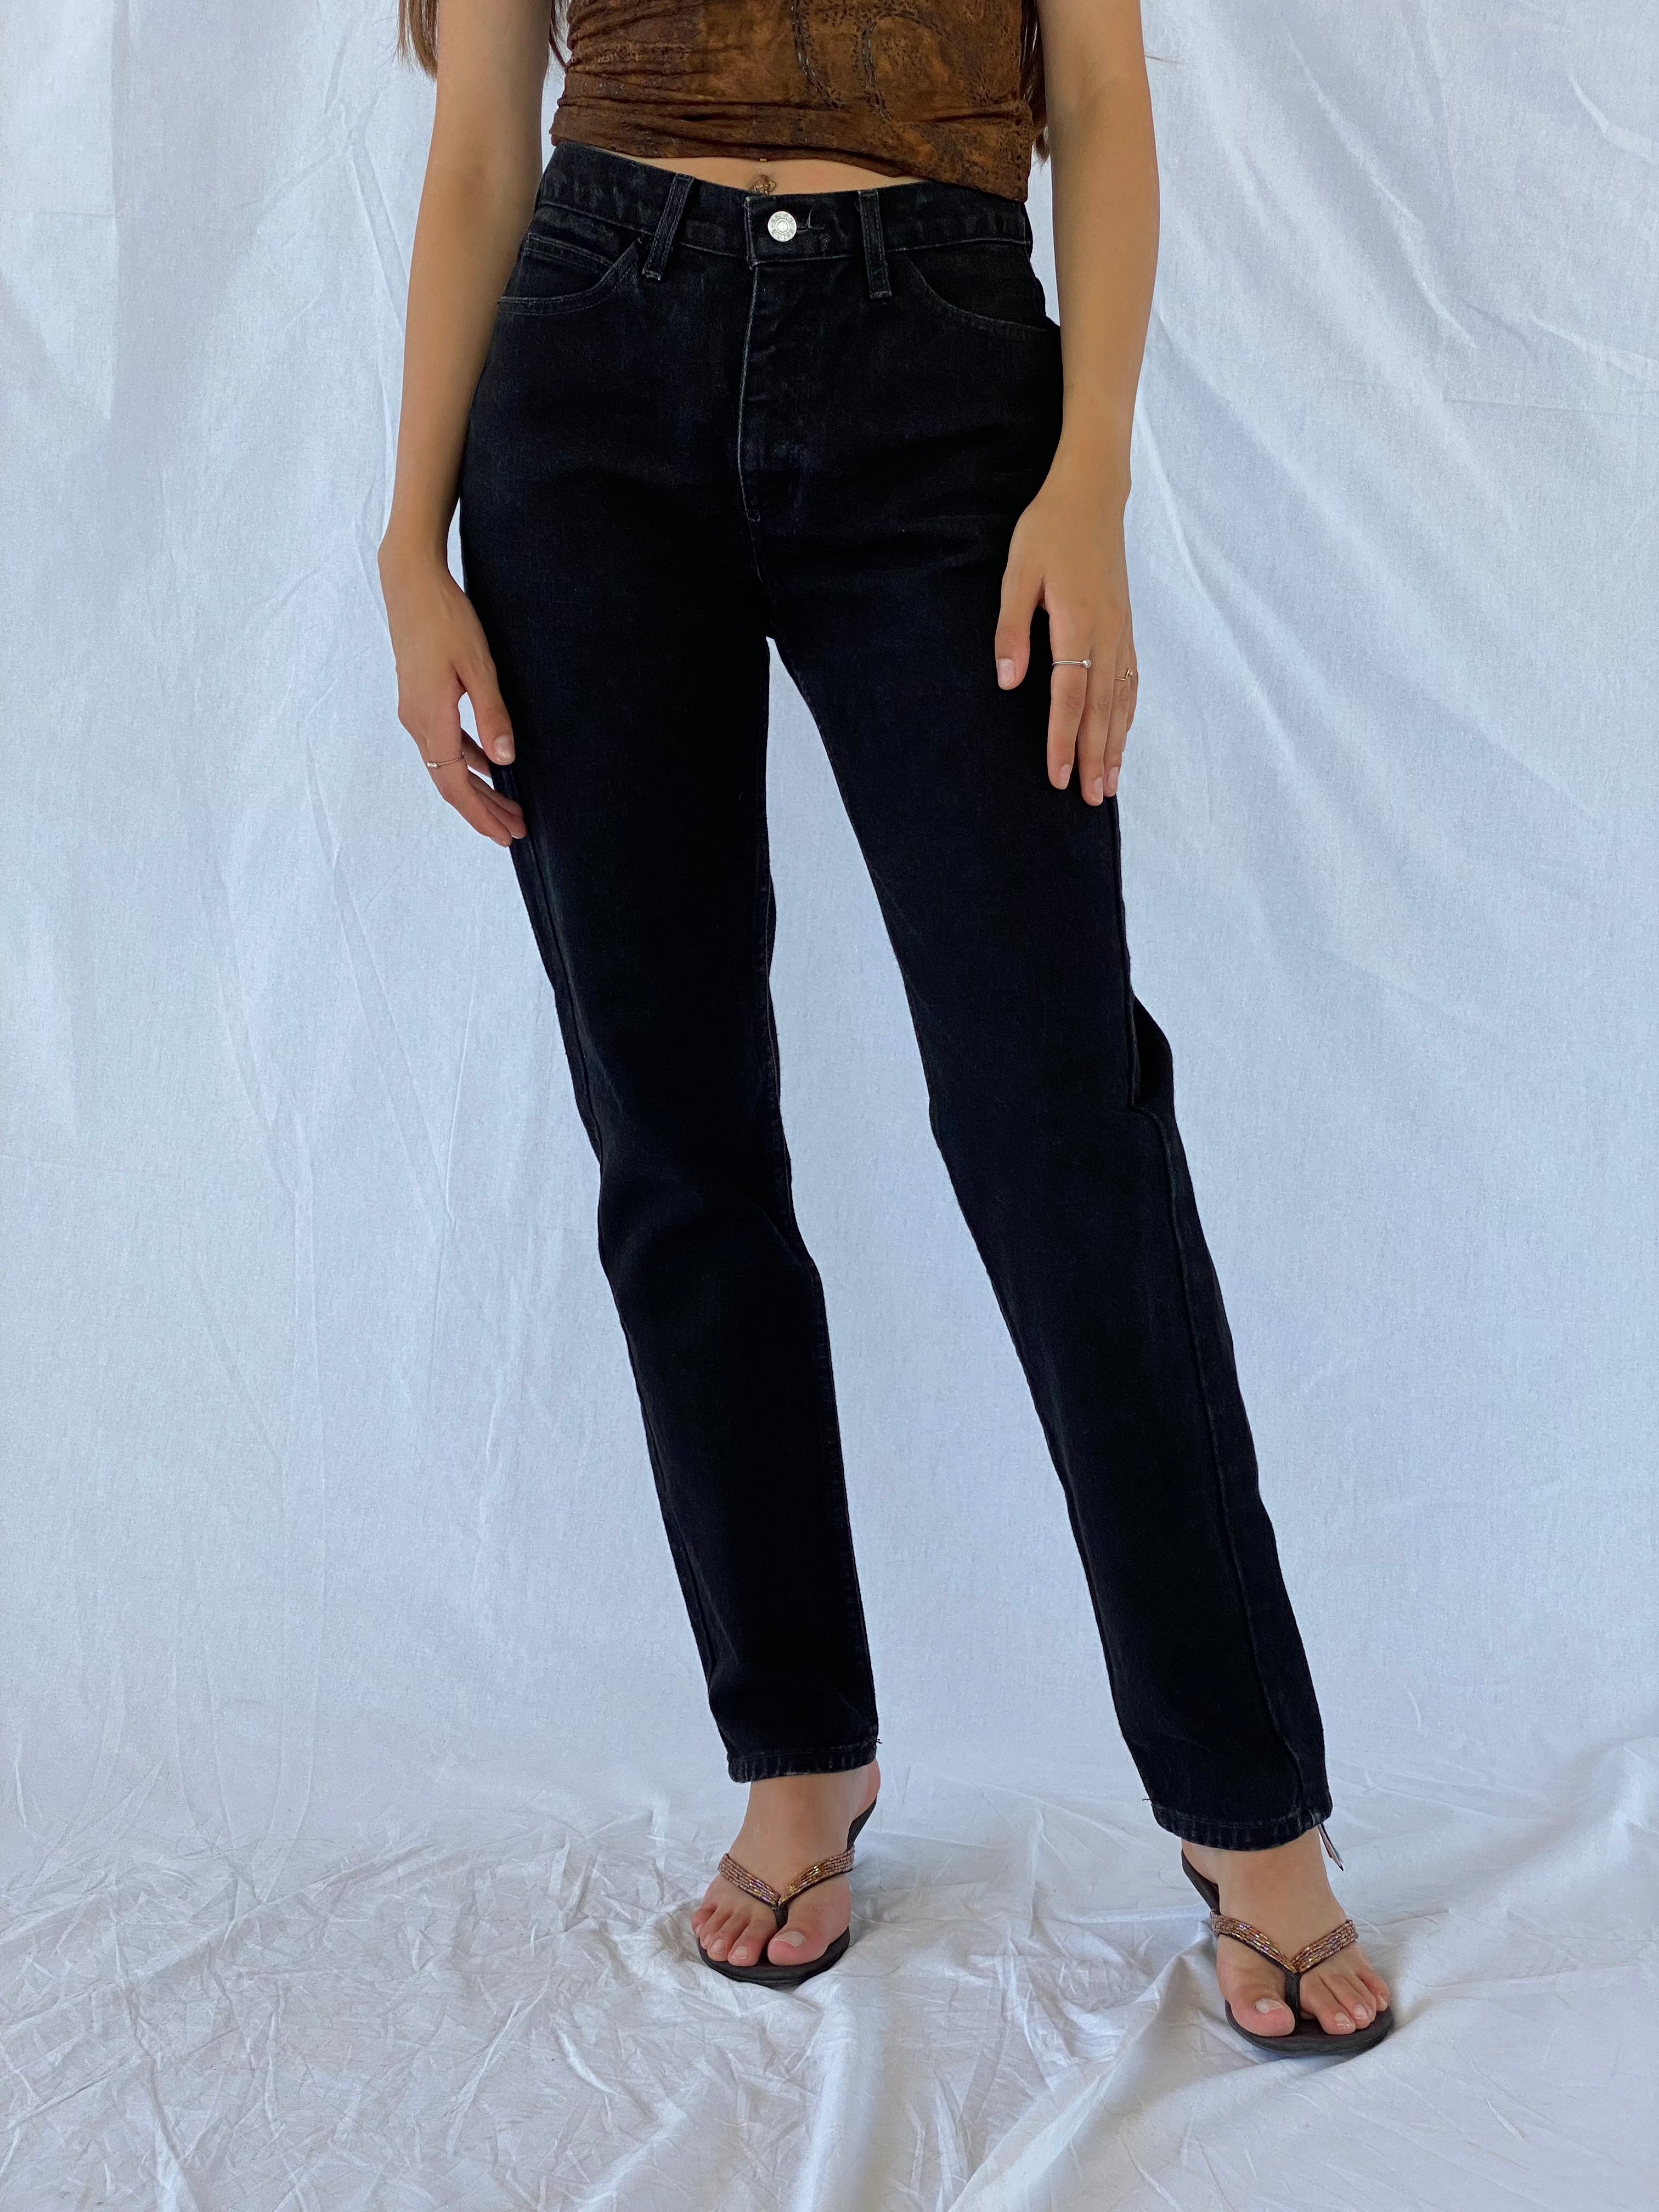 Vintage Guess Jeans - Balagan Vintage Jeans 00s, 90s, black denim, denim, guess, guess jeans, jeans, straight cut jeans, straightcut, vintage, vintage jeans